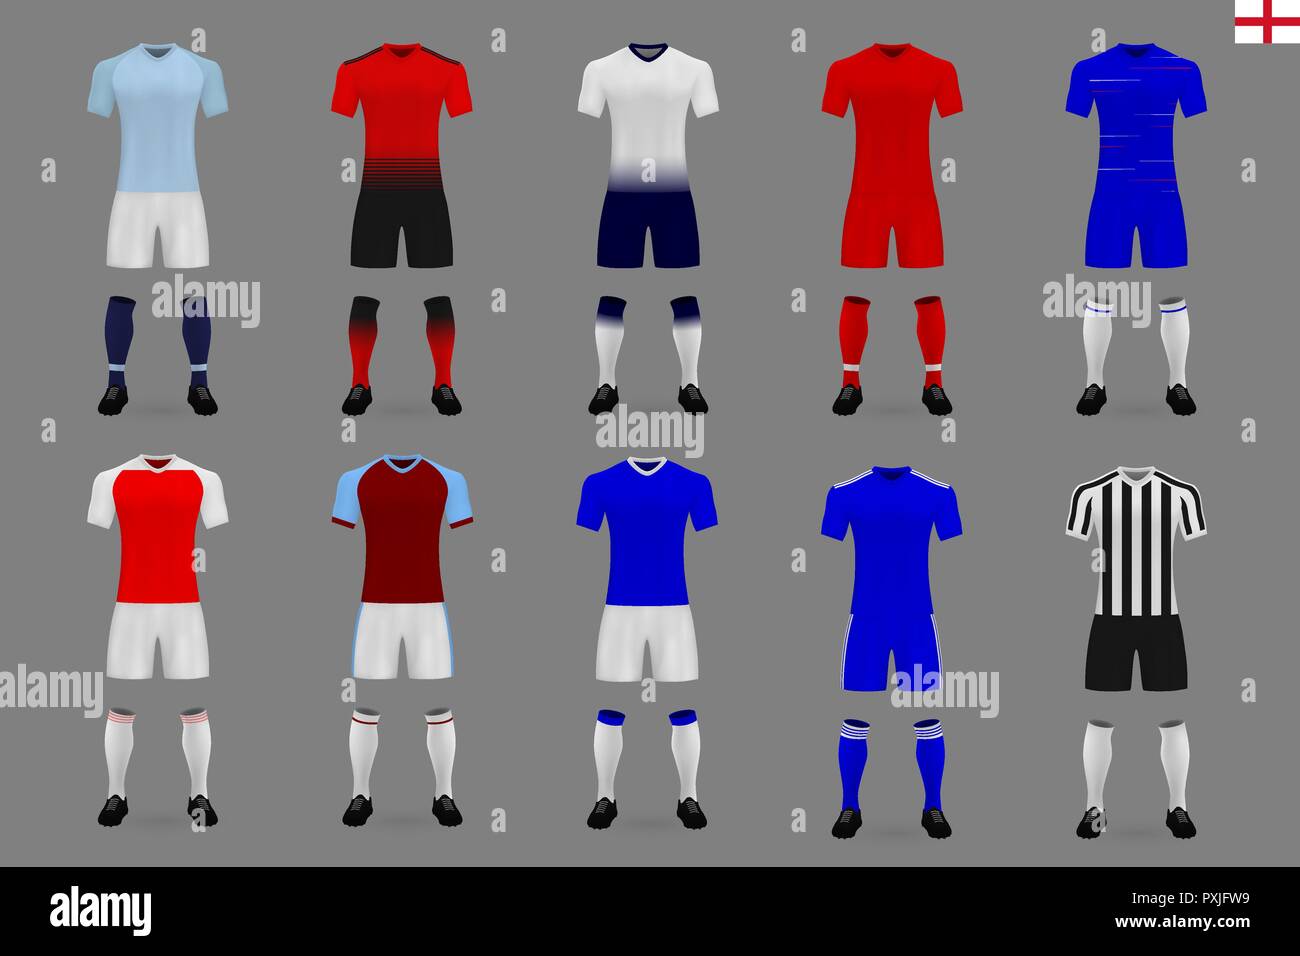 Premier League Kit History: 2013-14 (Away) Quiz - By Noldeh